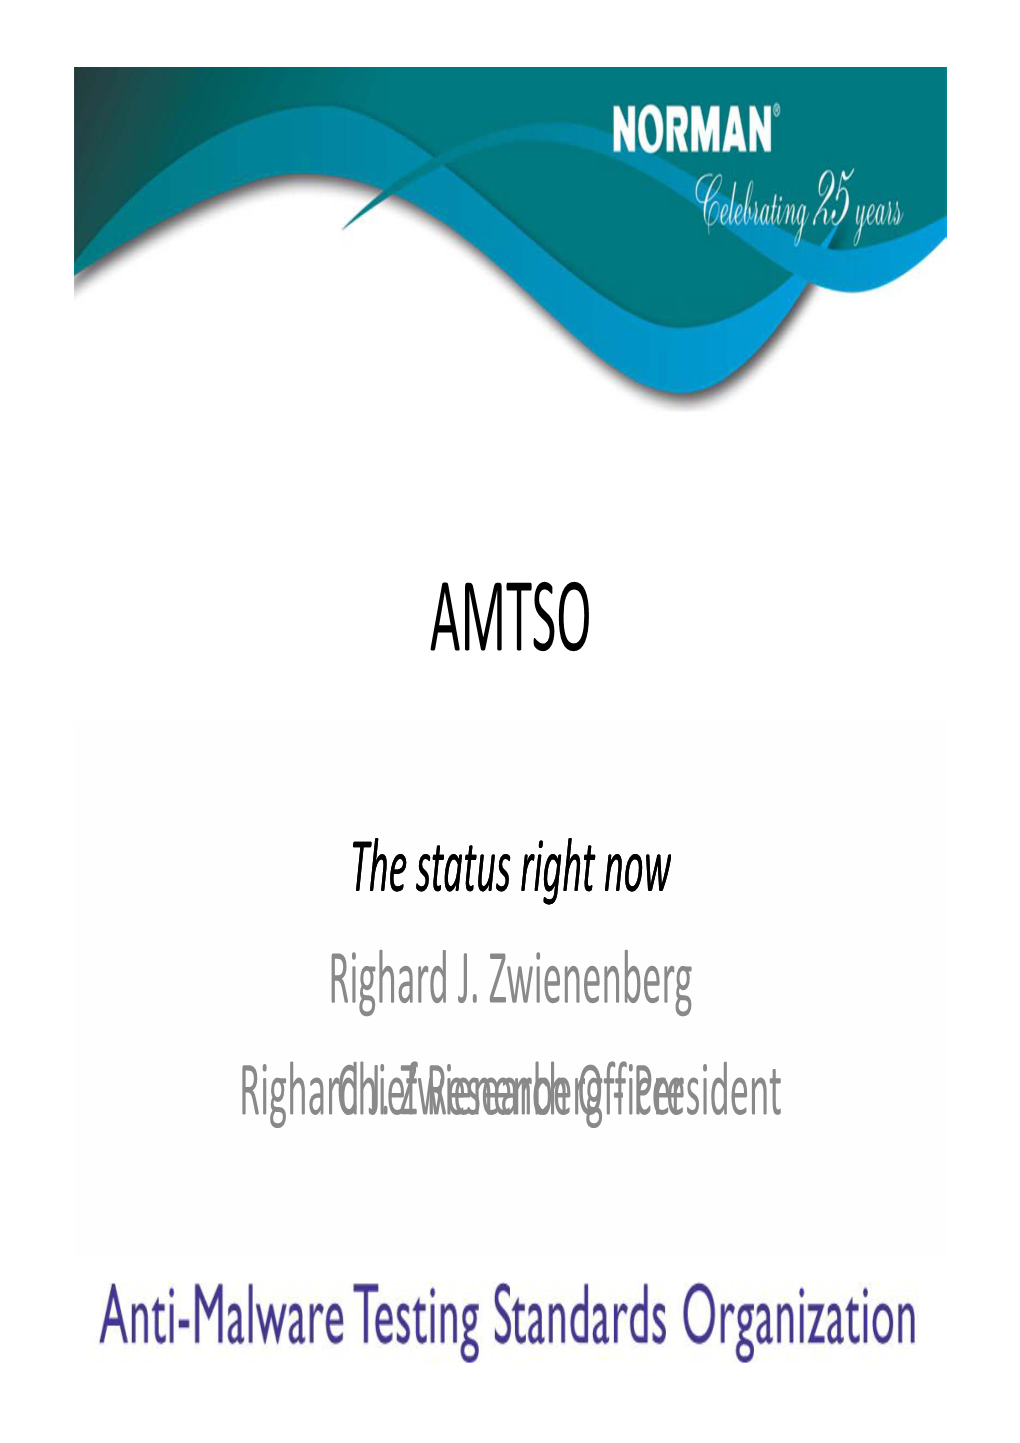 Anti-Malware Testing Standards Oragnization (AMTSO)